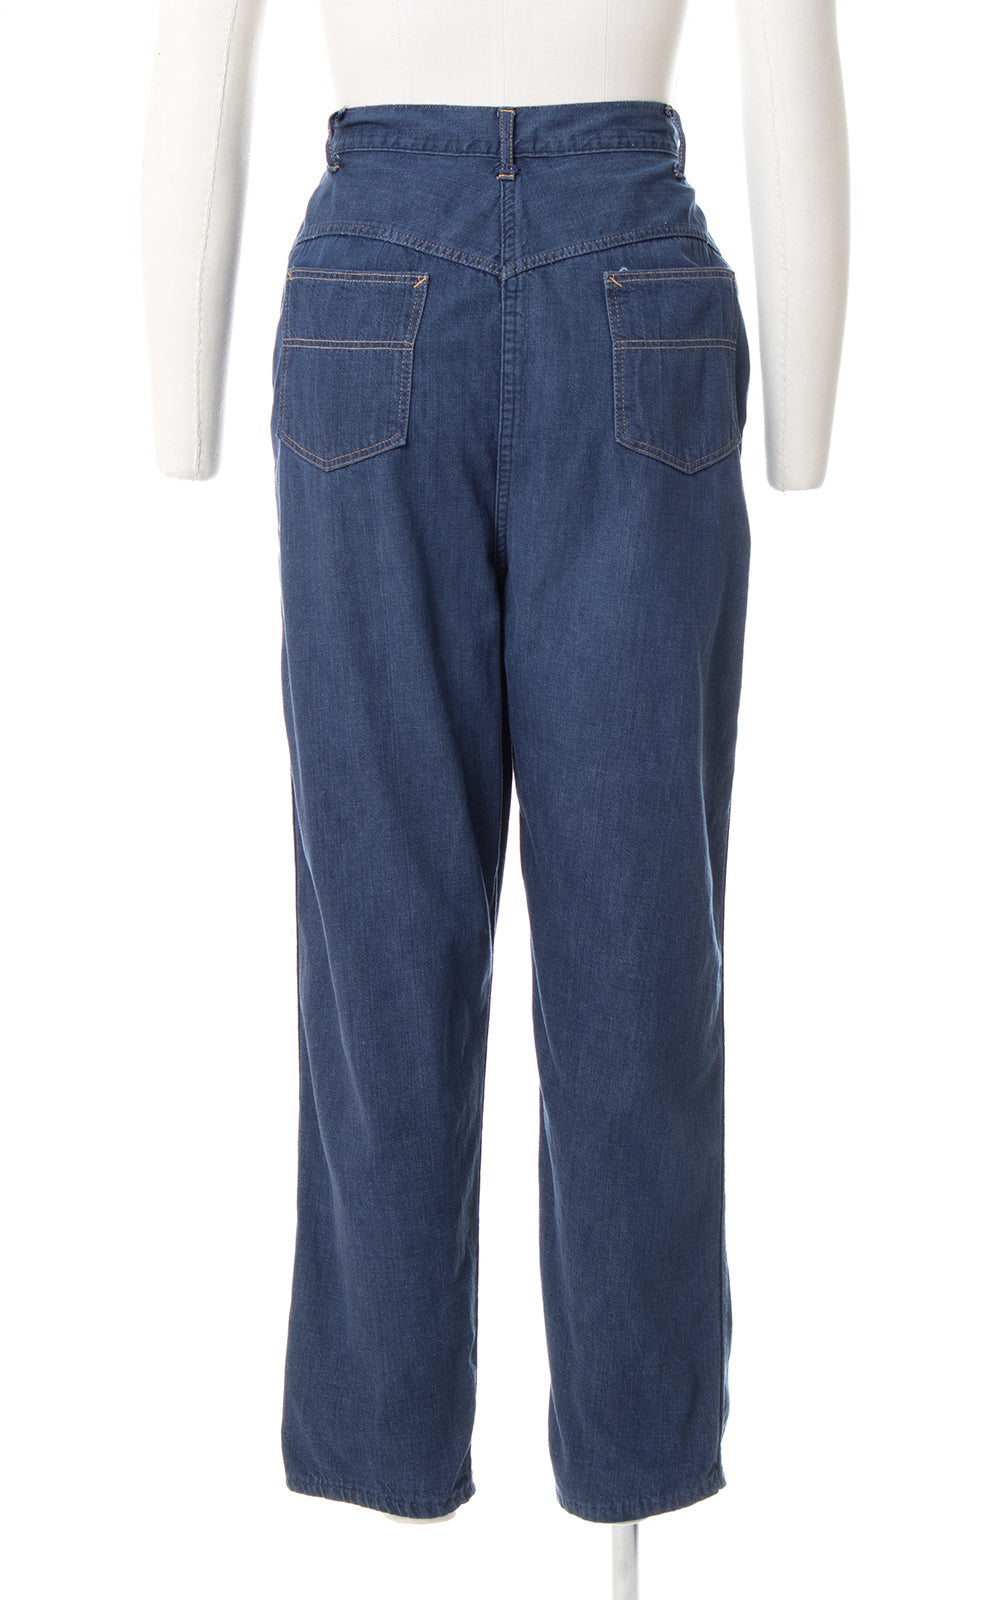 1950s Side Zip Denim Jeans